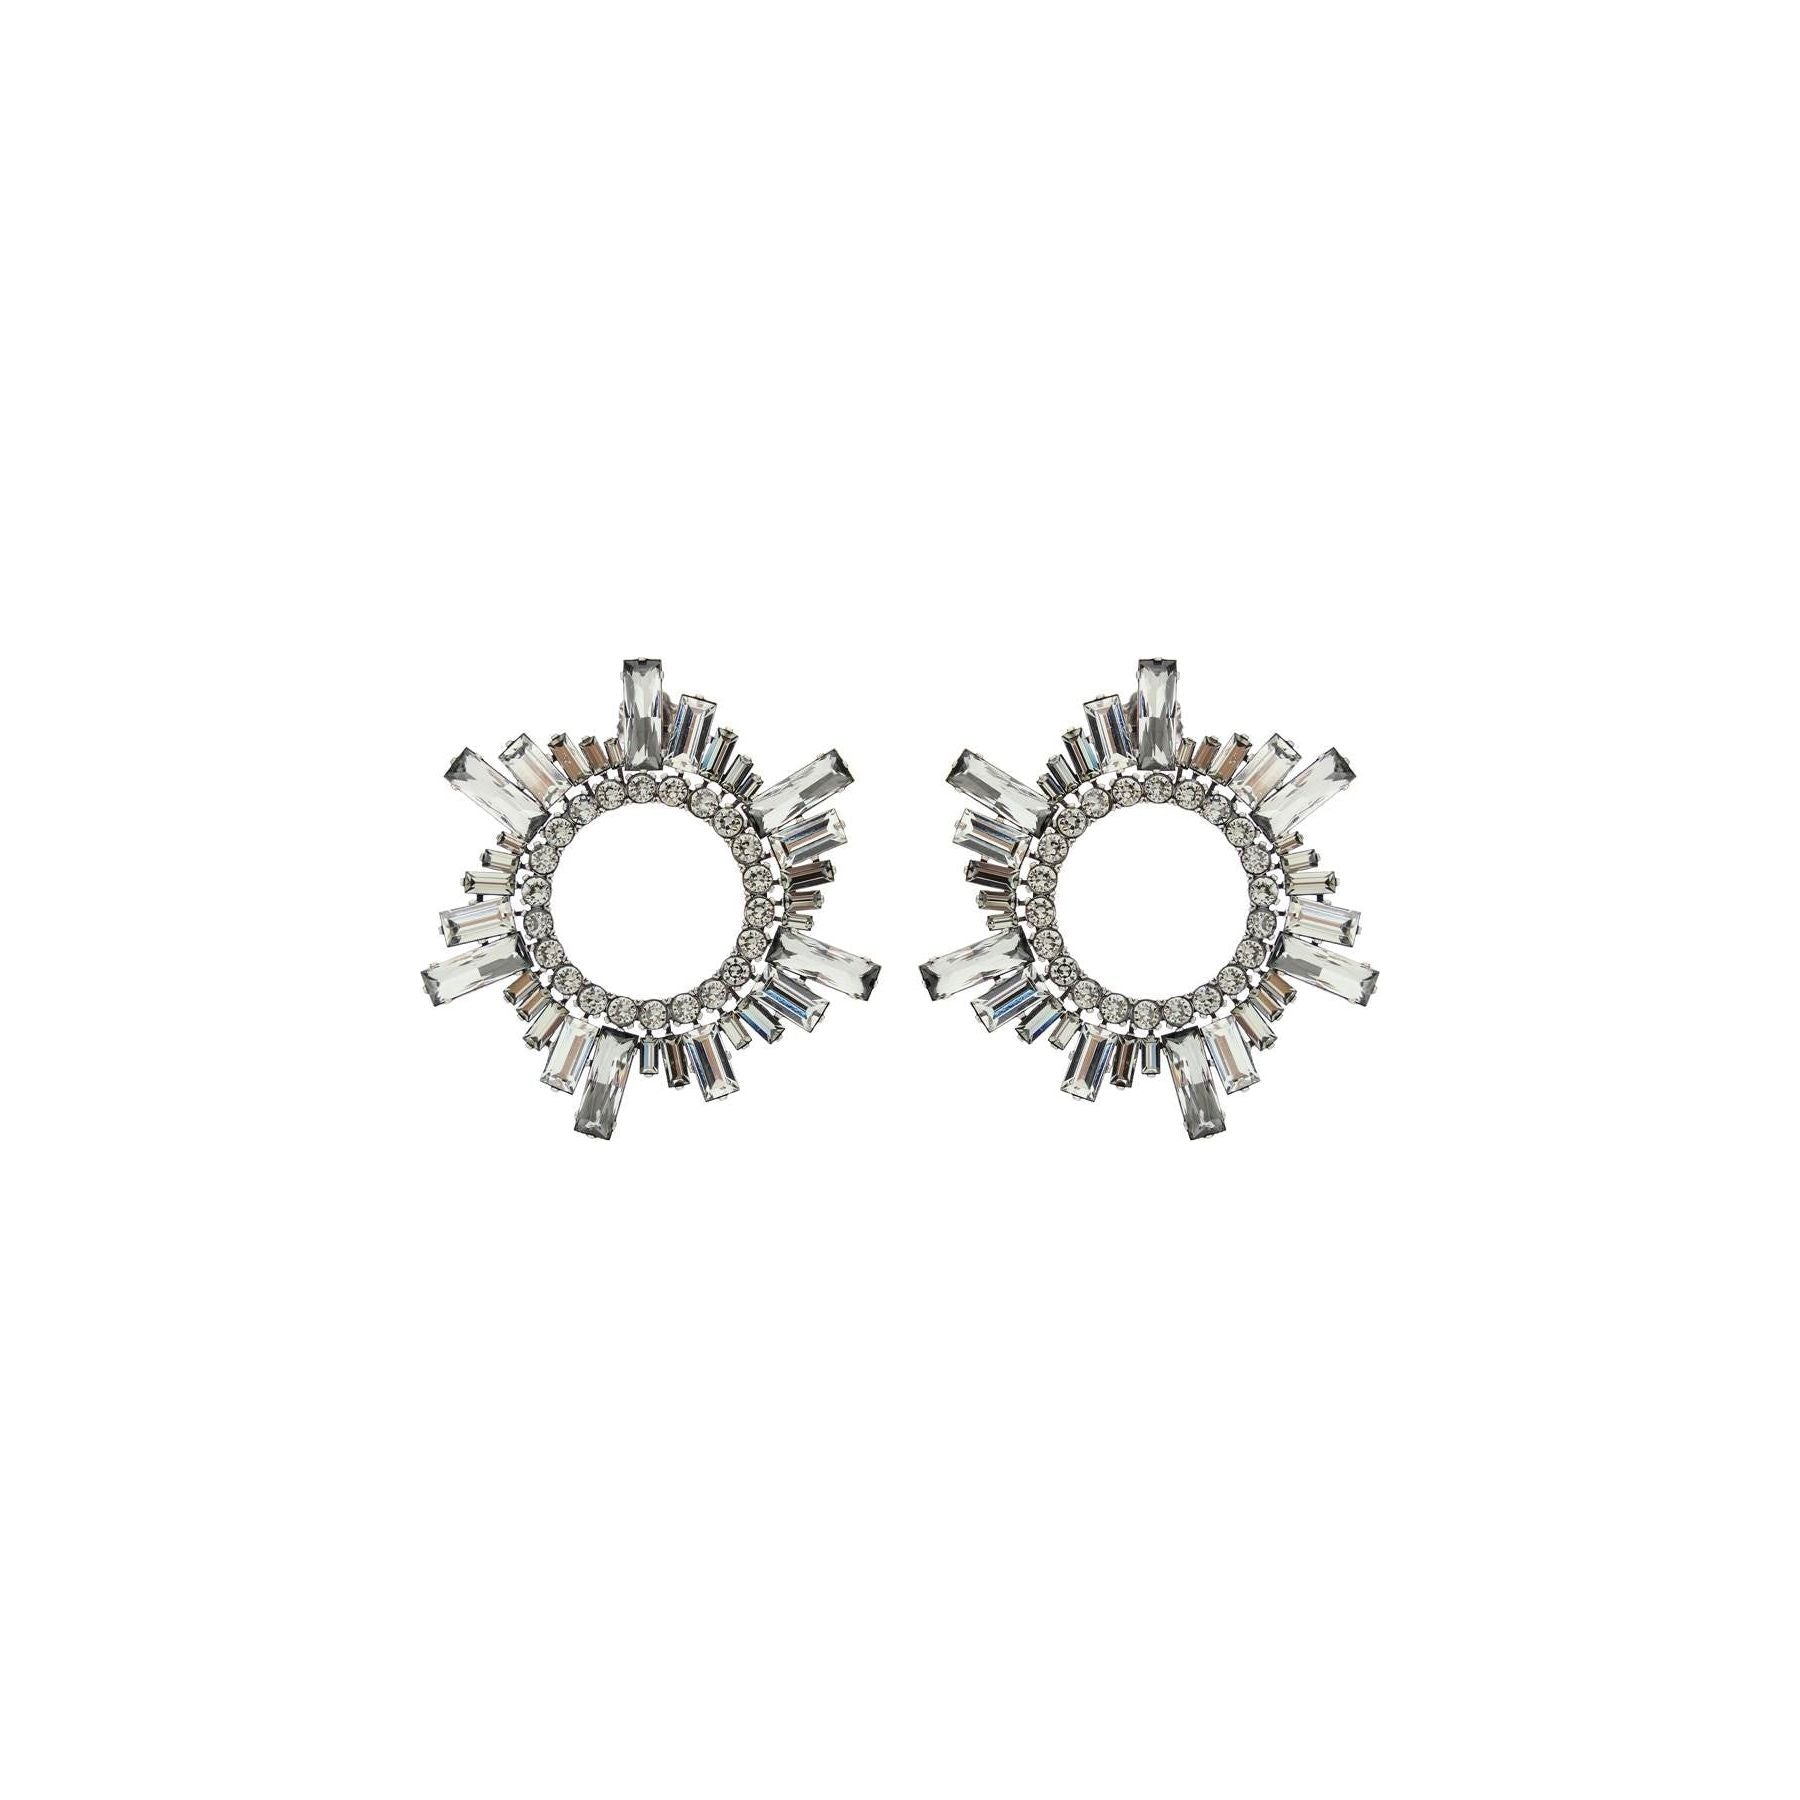 Antiquated Silver Metal Begum Buckle Earrings with Dark Swarovski Crystals